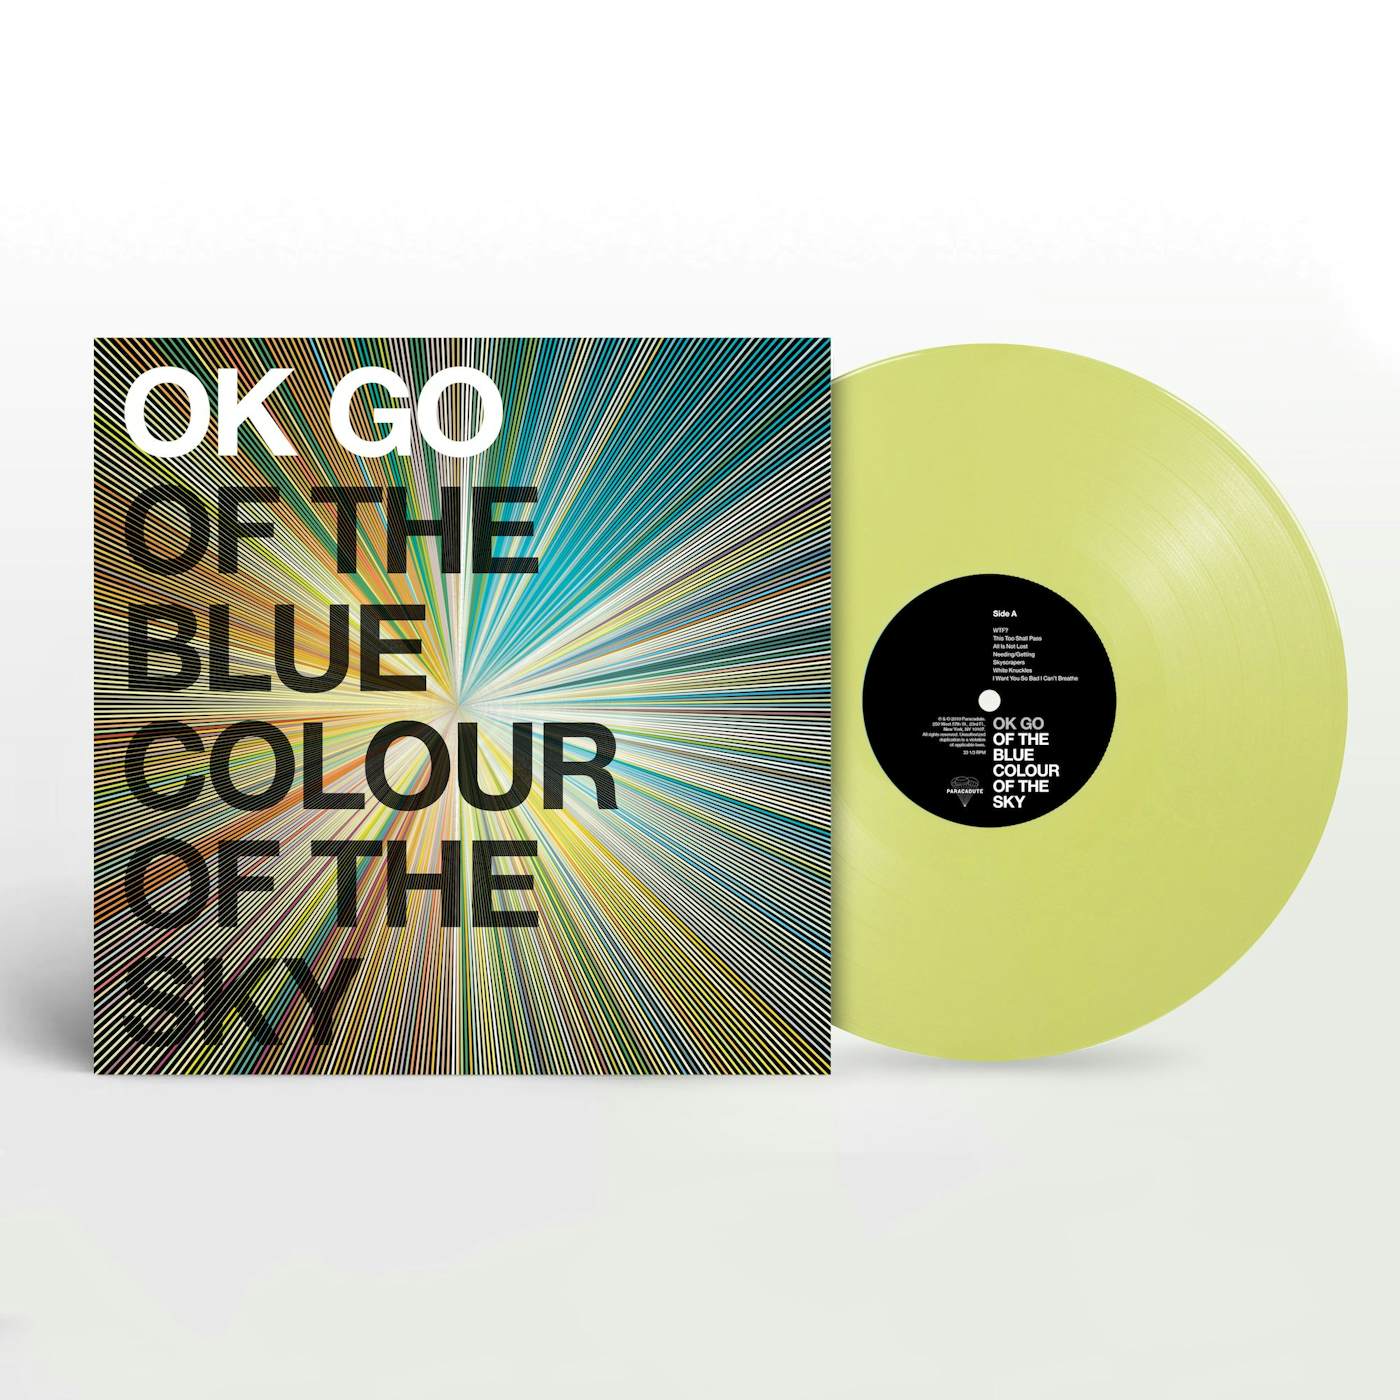 OK Go - Of The Blue Colour Of The Sky Yellow Vinyl